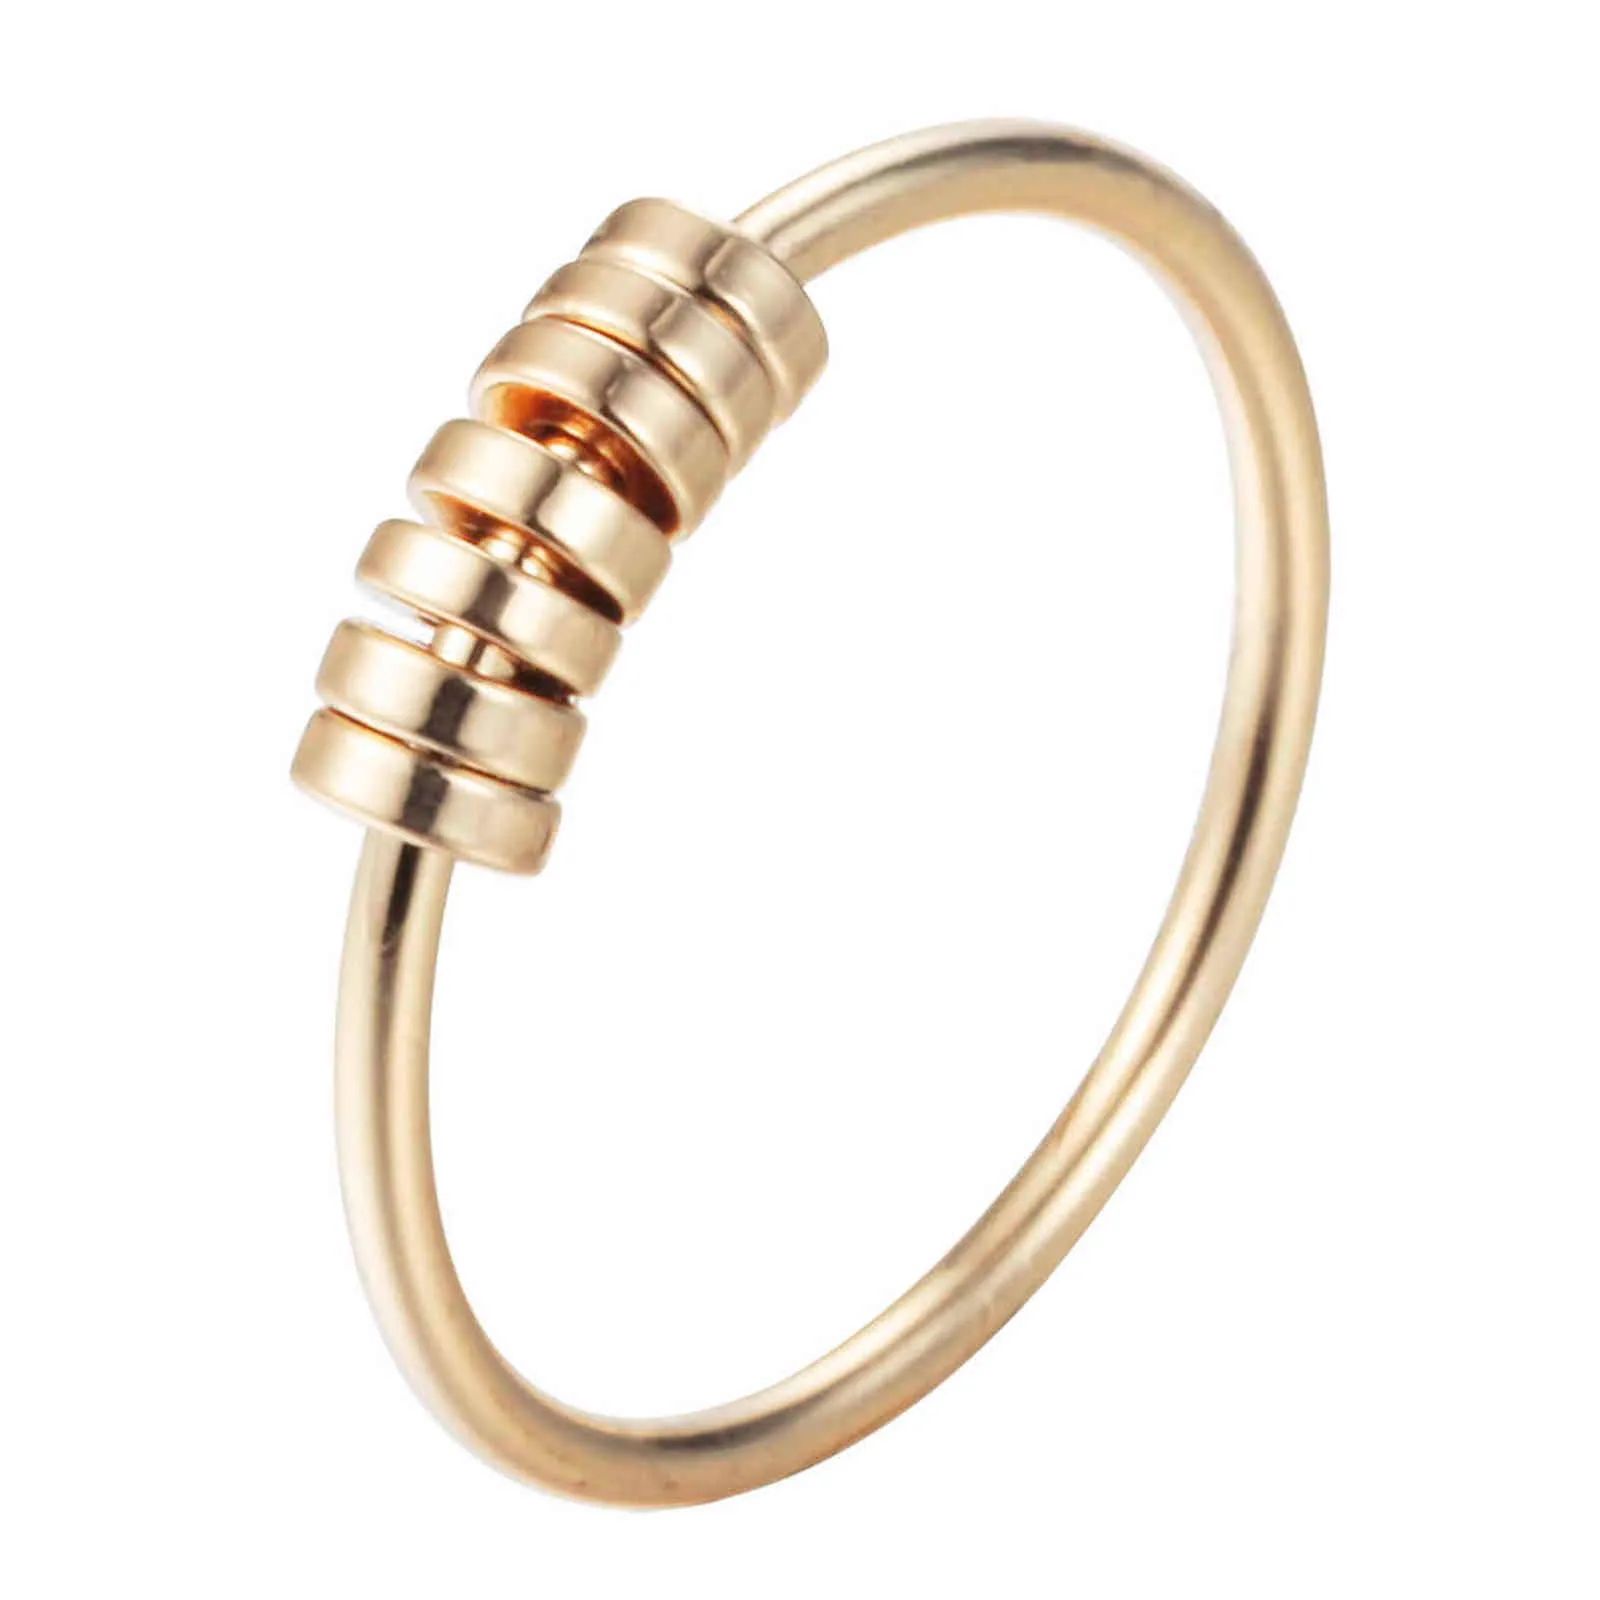 LUTAKU Punk Rock Gold-color Plain Band Midi Finger Knuckle Rings For Women Mid Finger Ring Thin Ring G1125